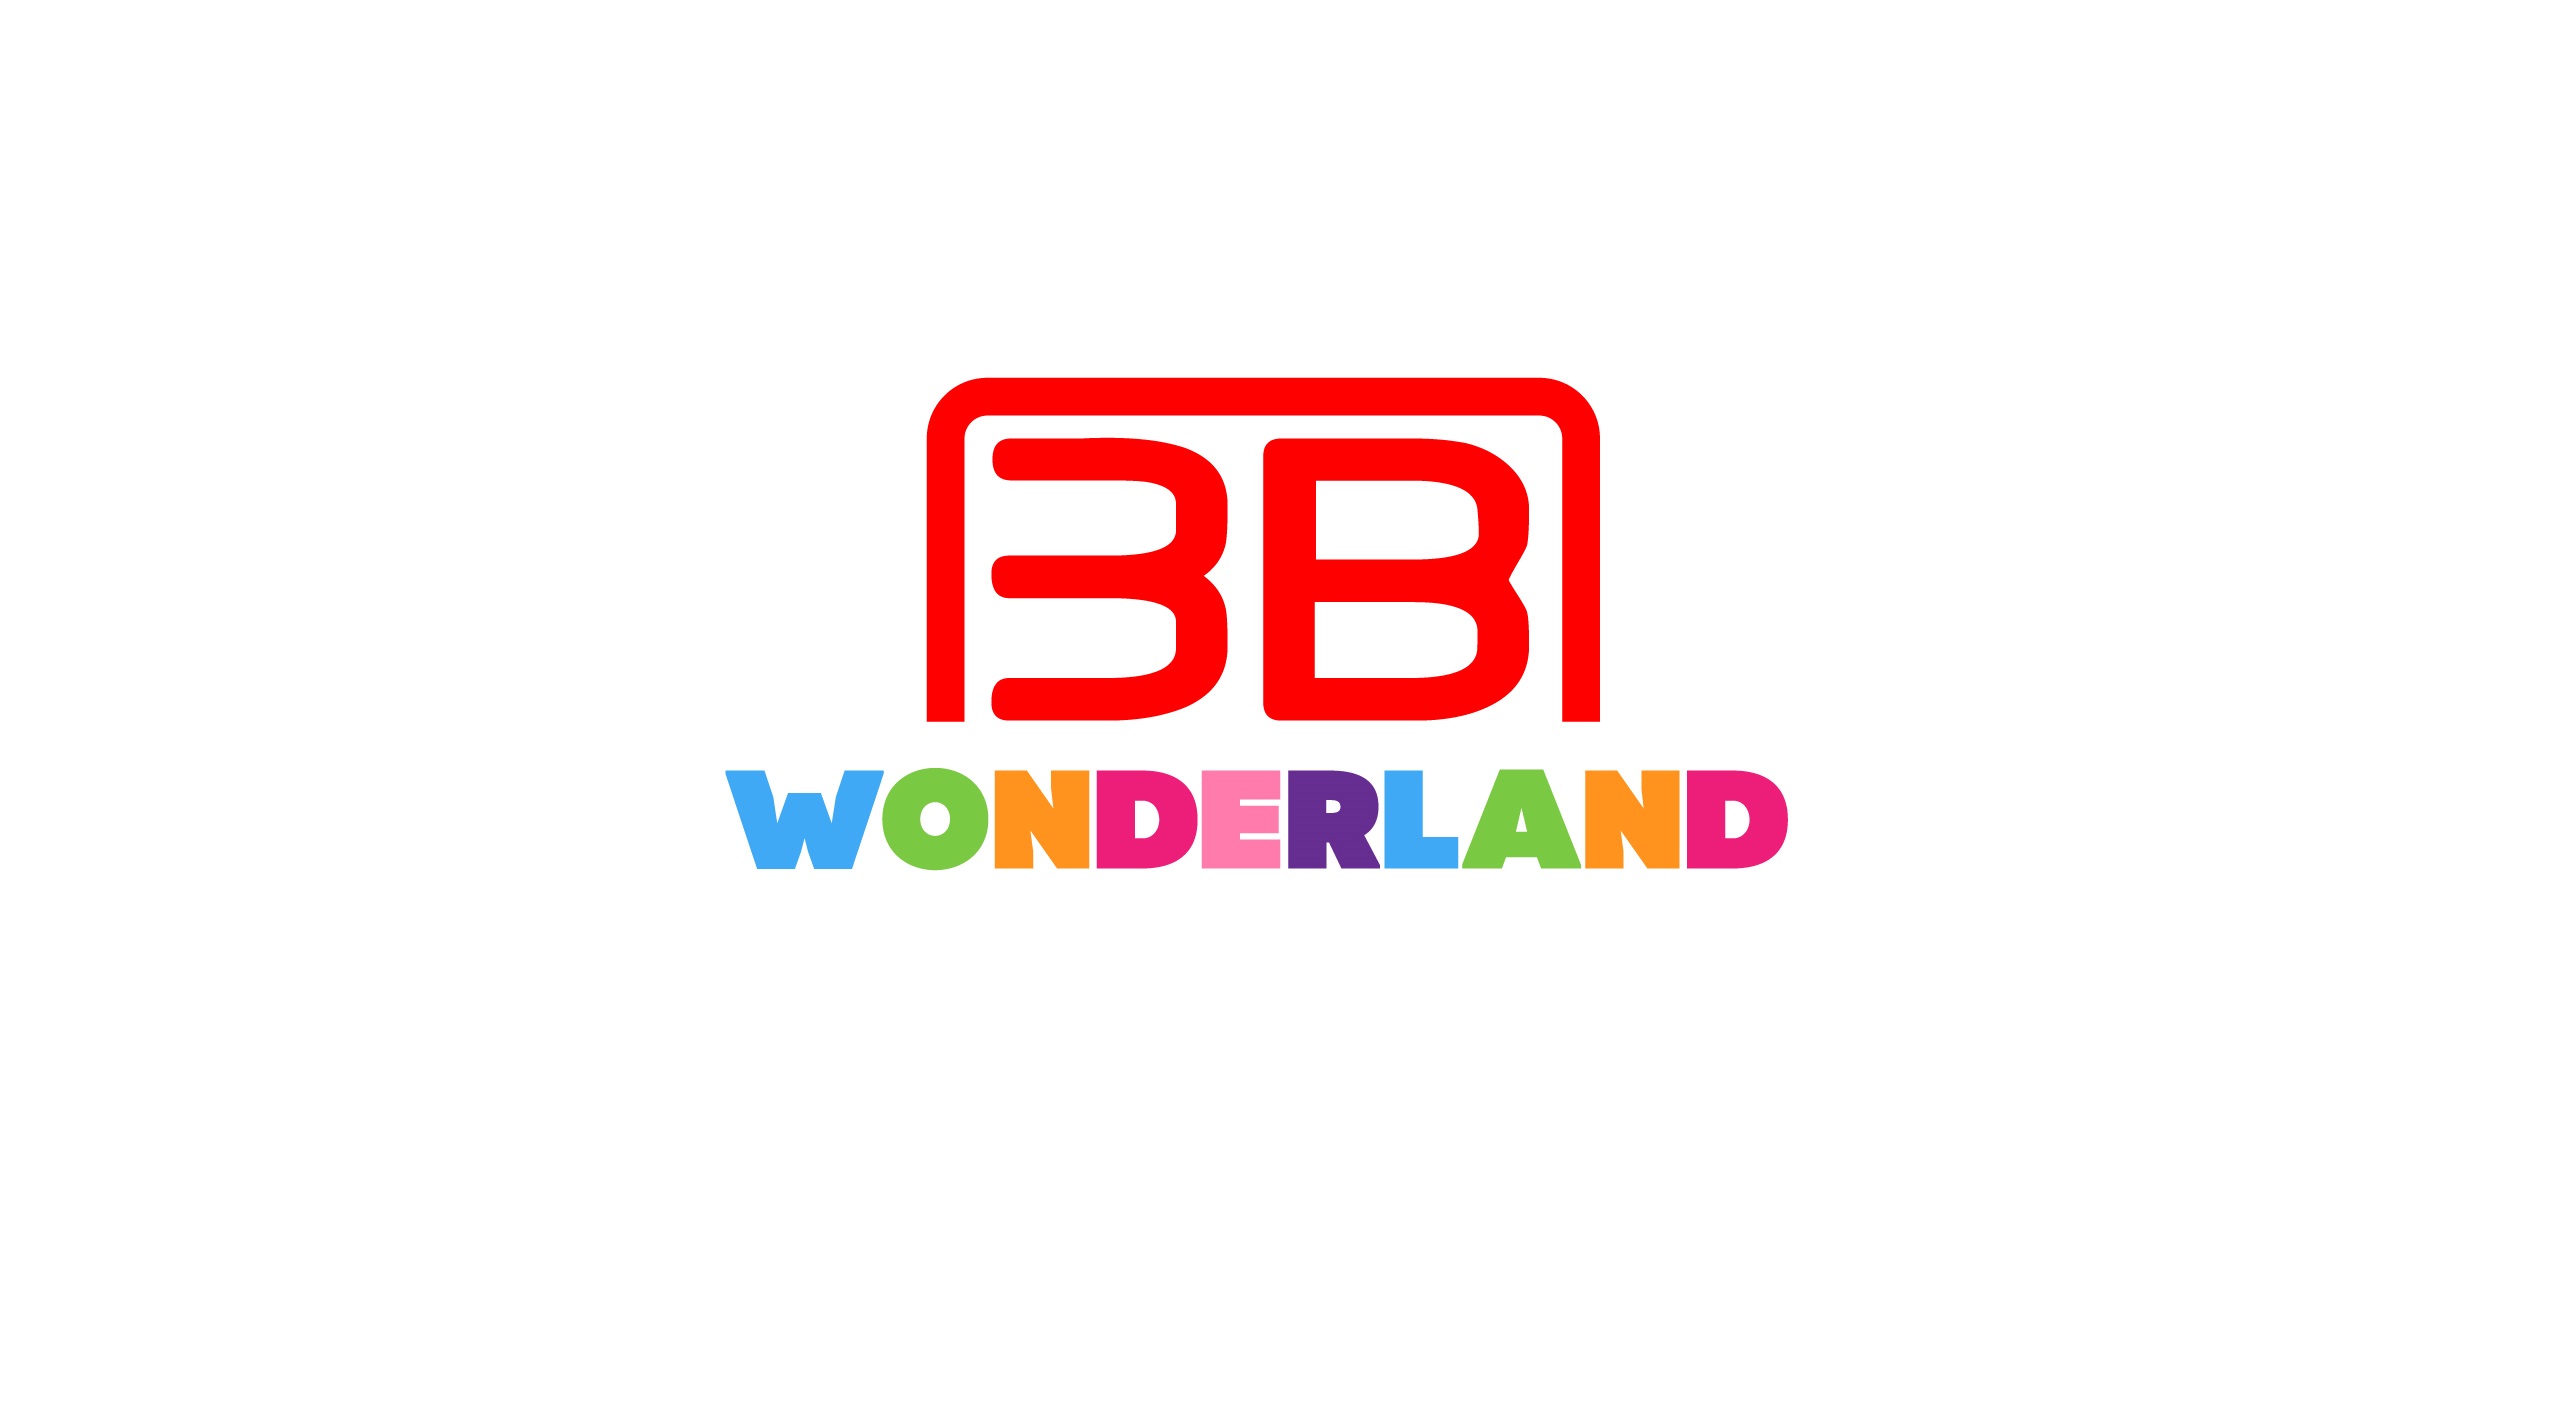 BBB WONDERLAND